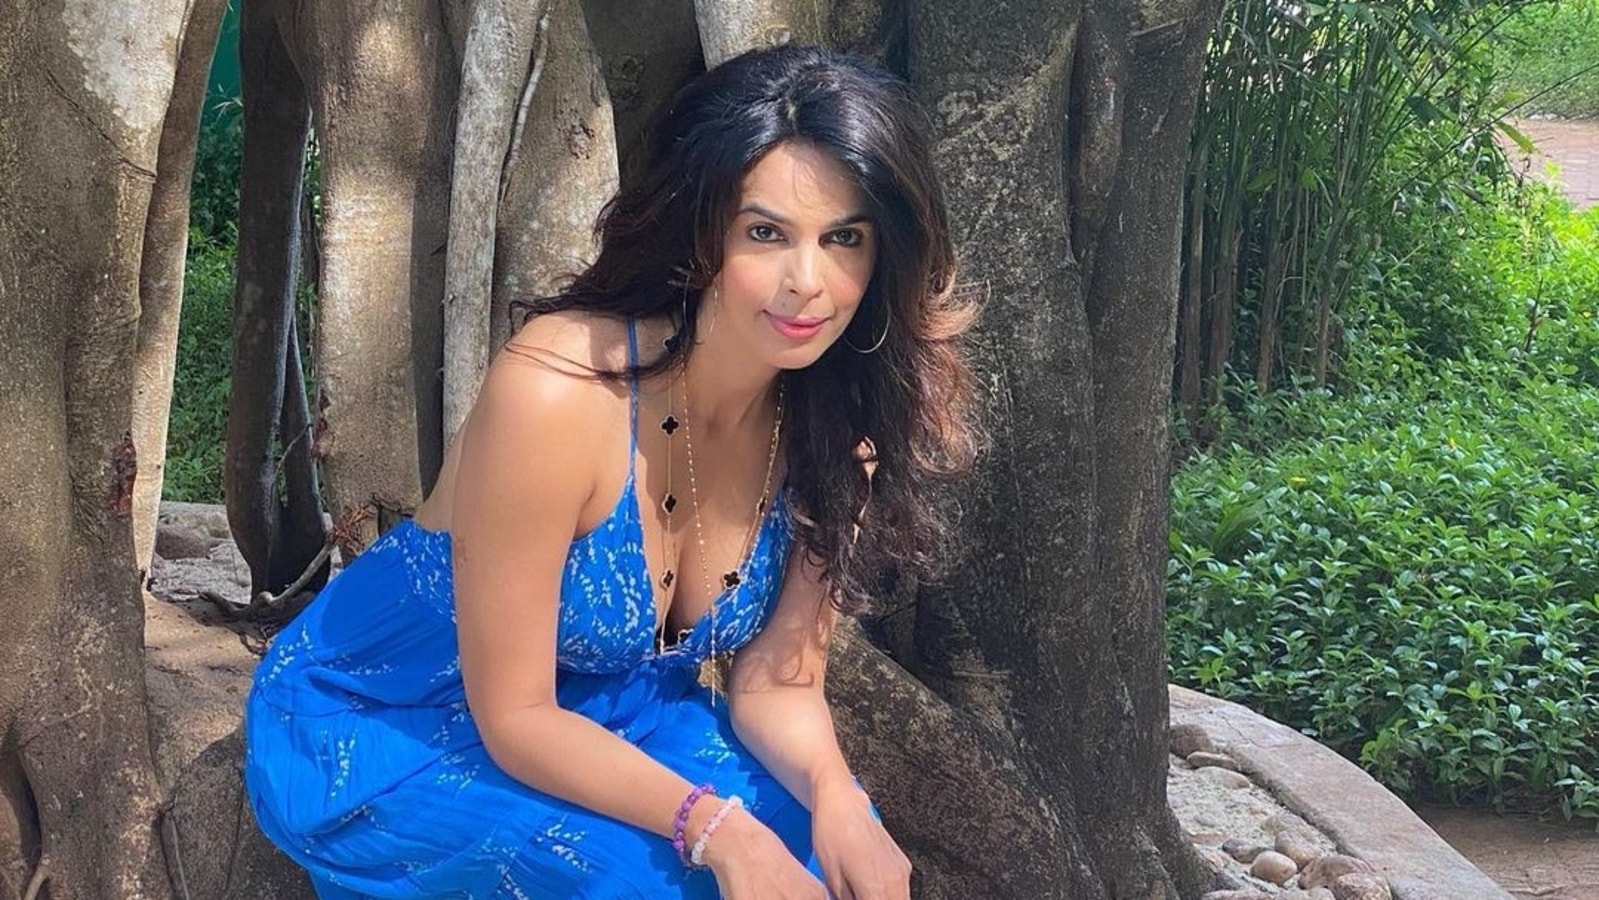 Mallika Sherawat Fucking Videos - Mallika Sherawat says her 'glamour was overwhelming' for Indian women |  Bollywood - Hindustan Times